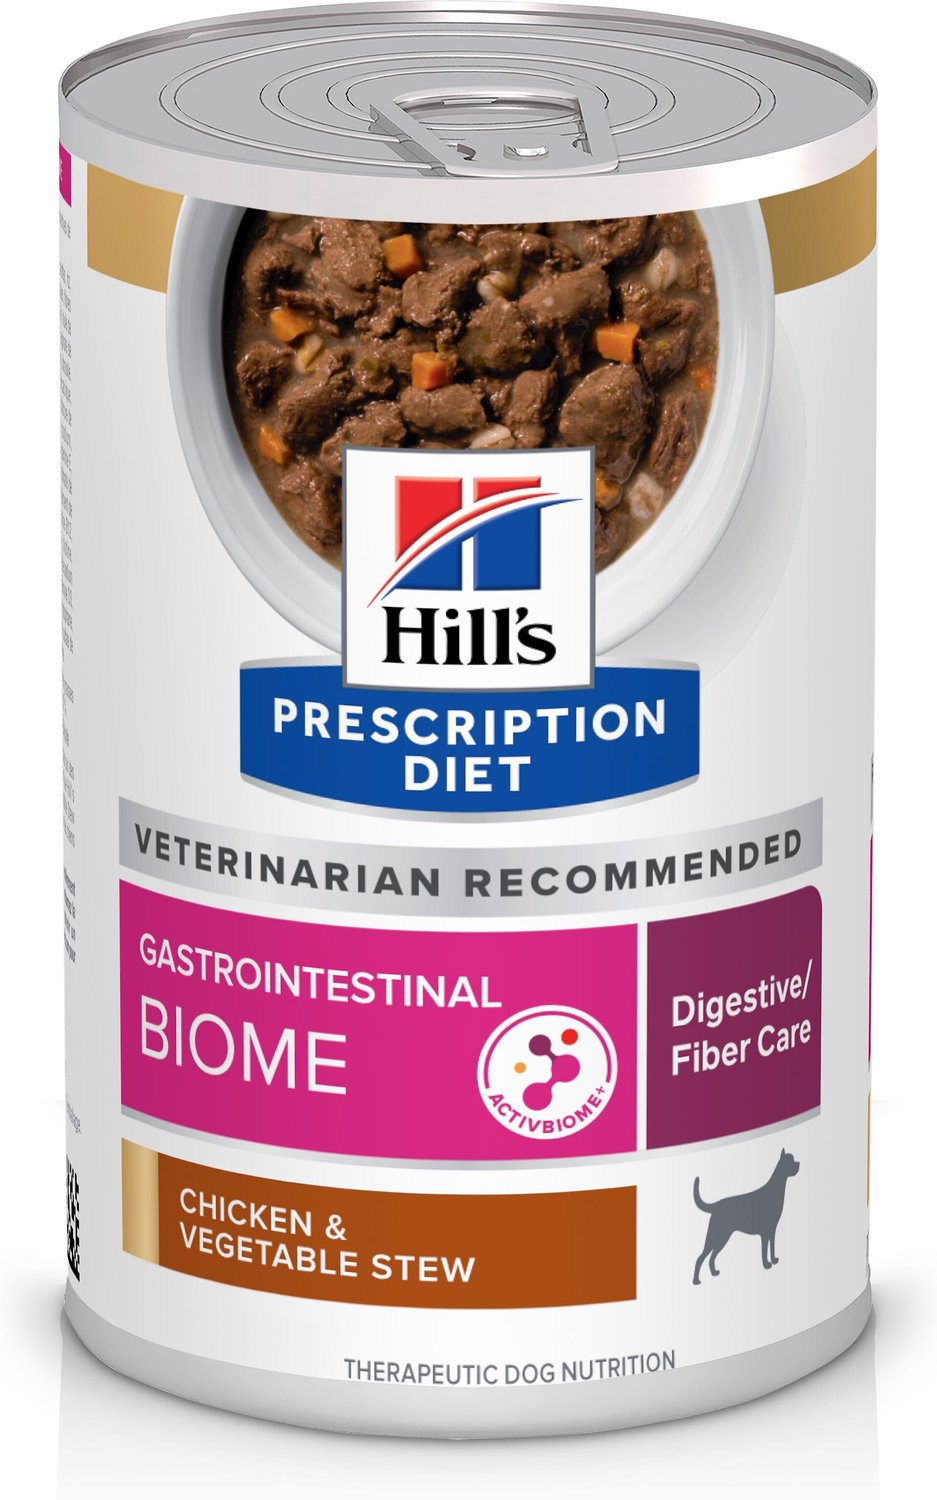 hills prescription diet gastrointestinal biome